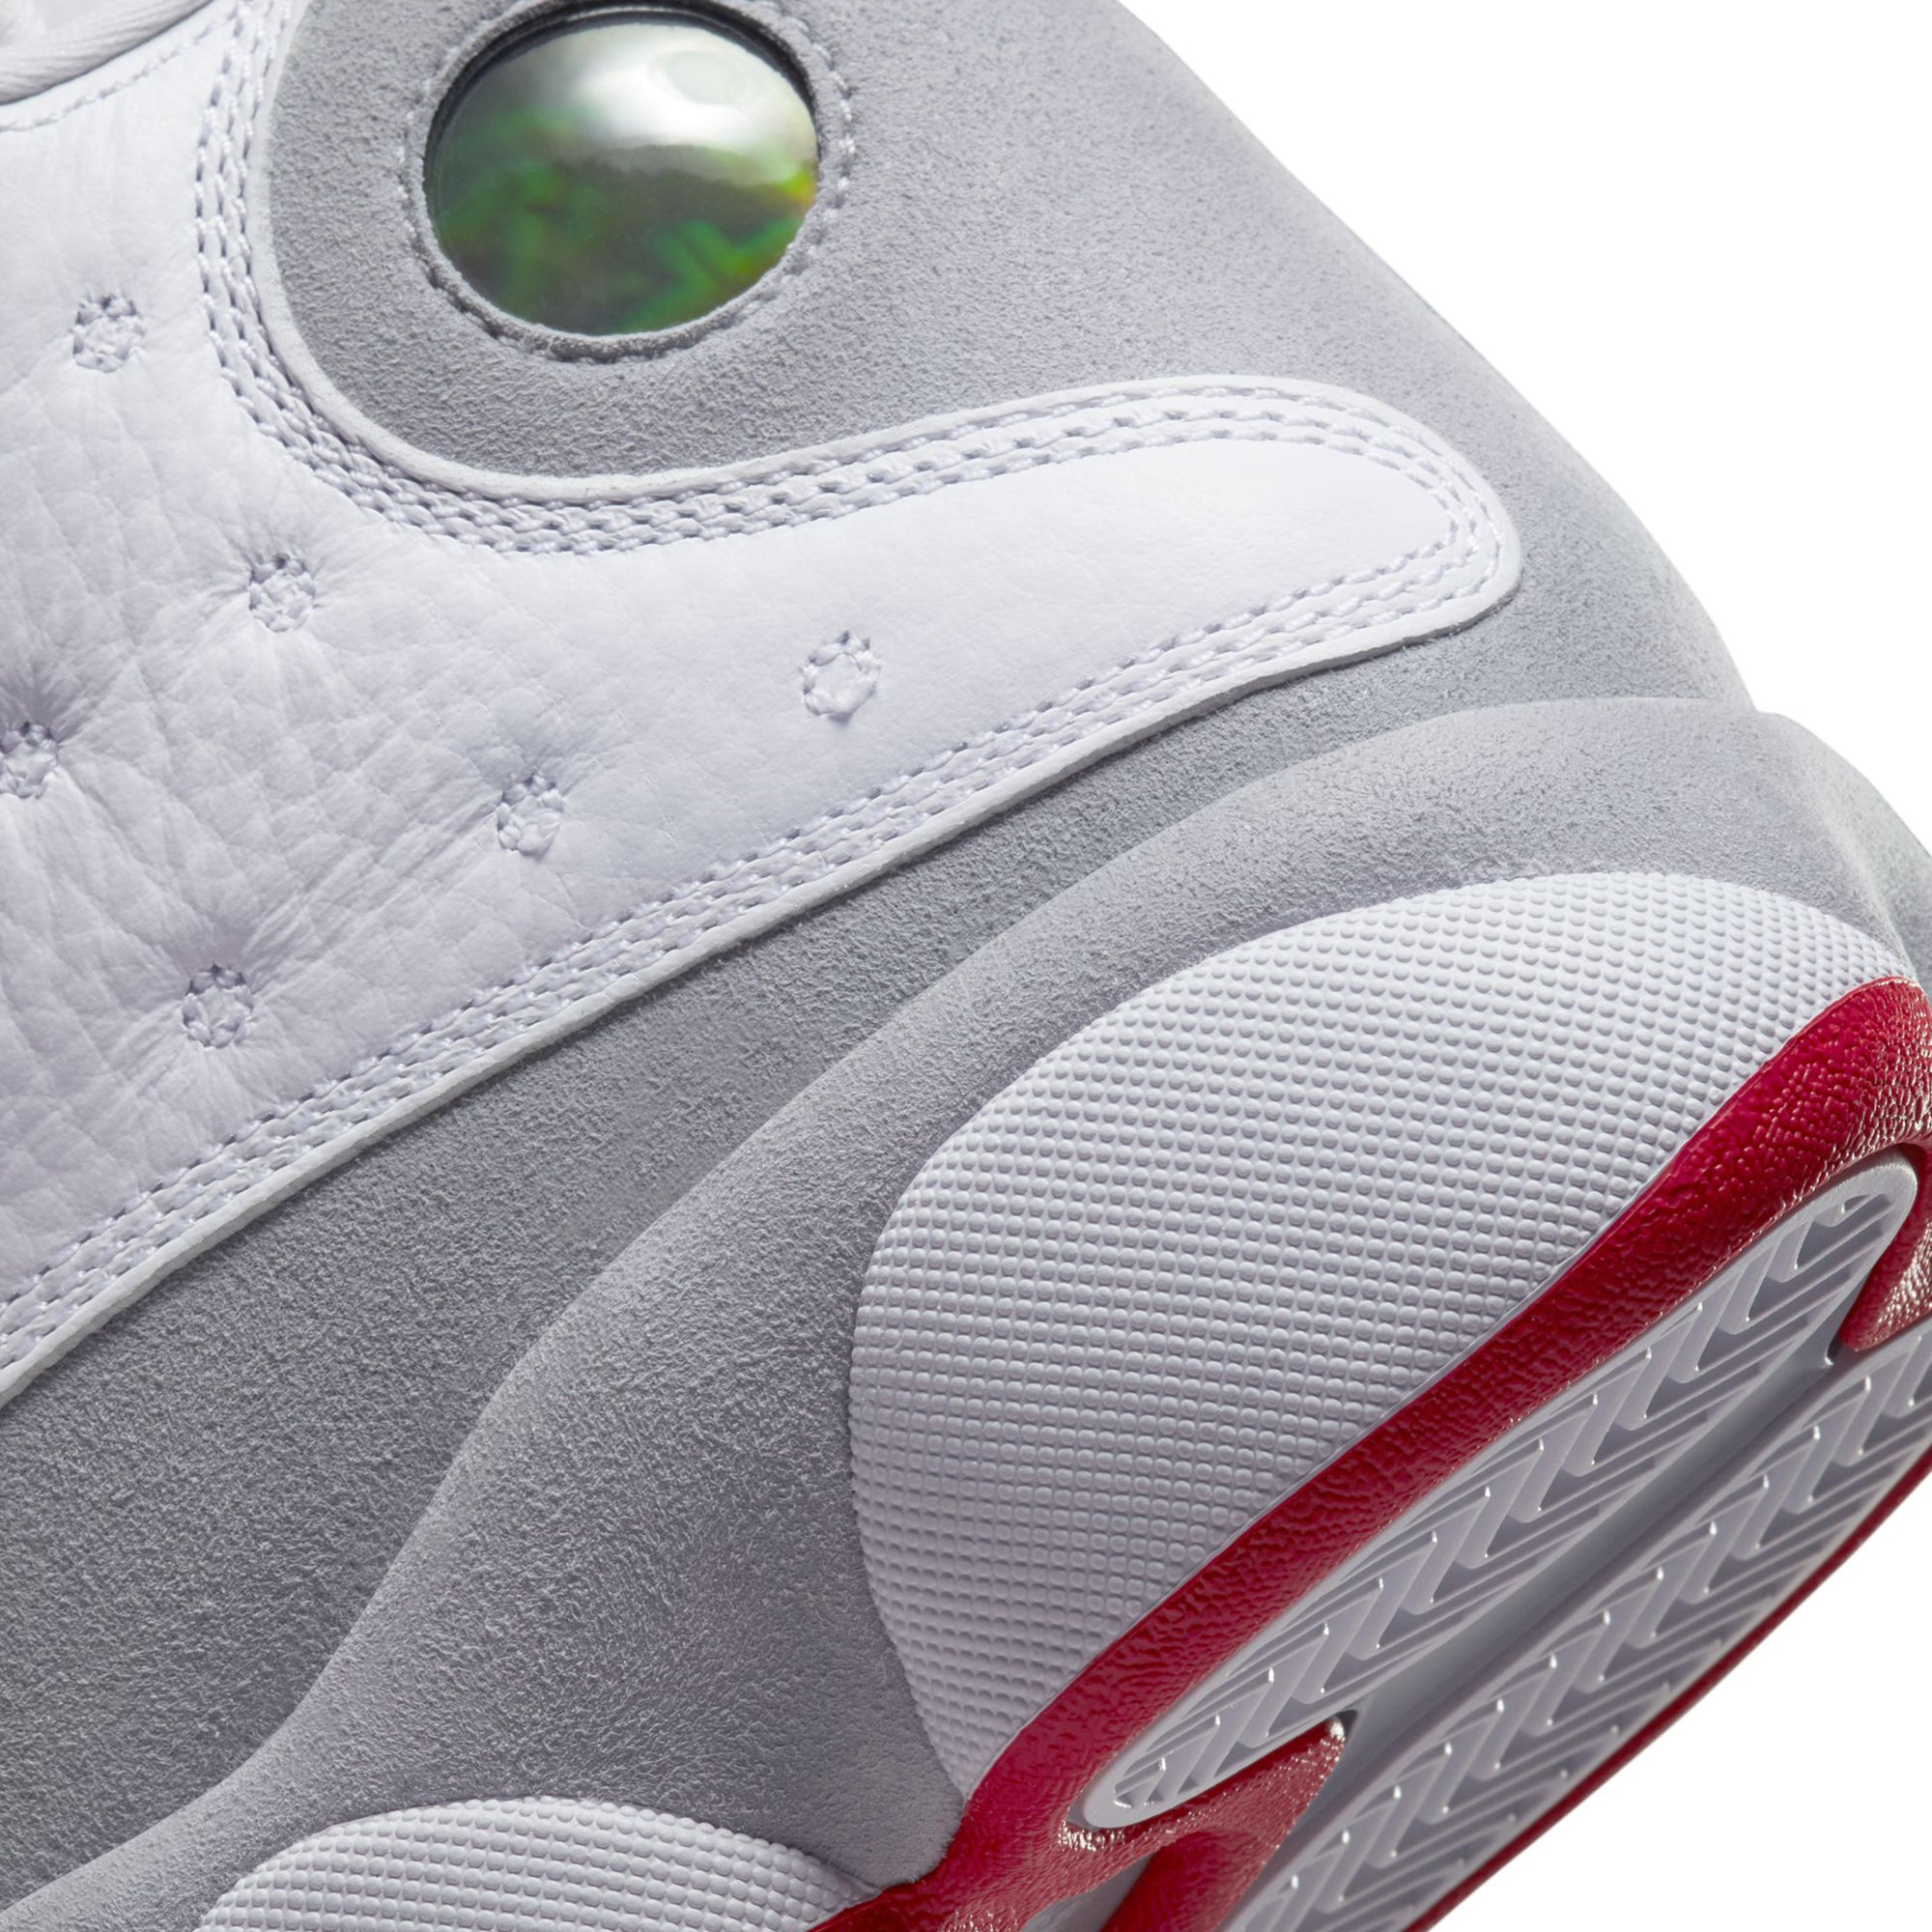 Air Jordan 13 Mix Supreme Limited Edition Sneaker Shoes